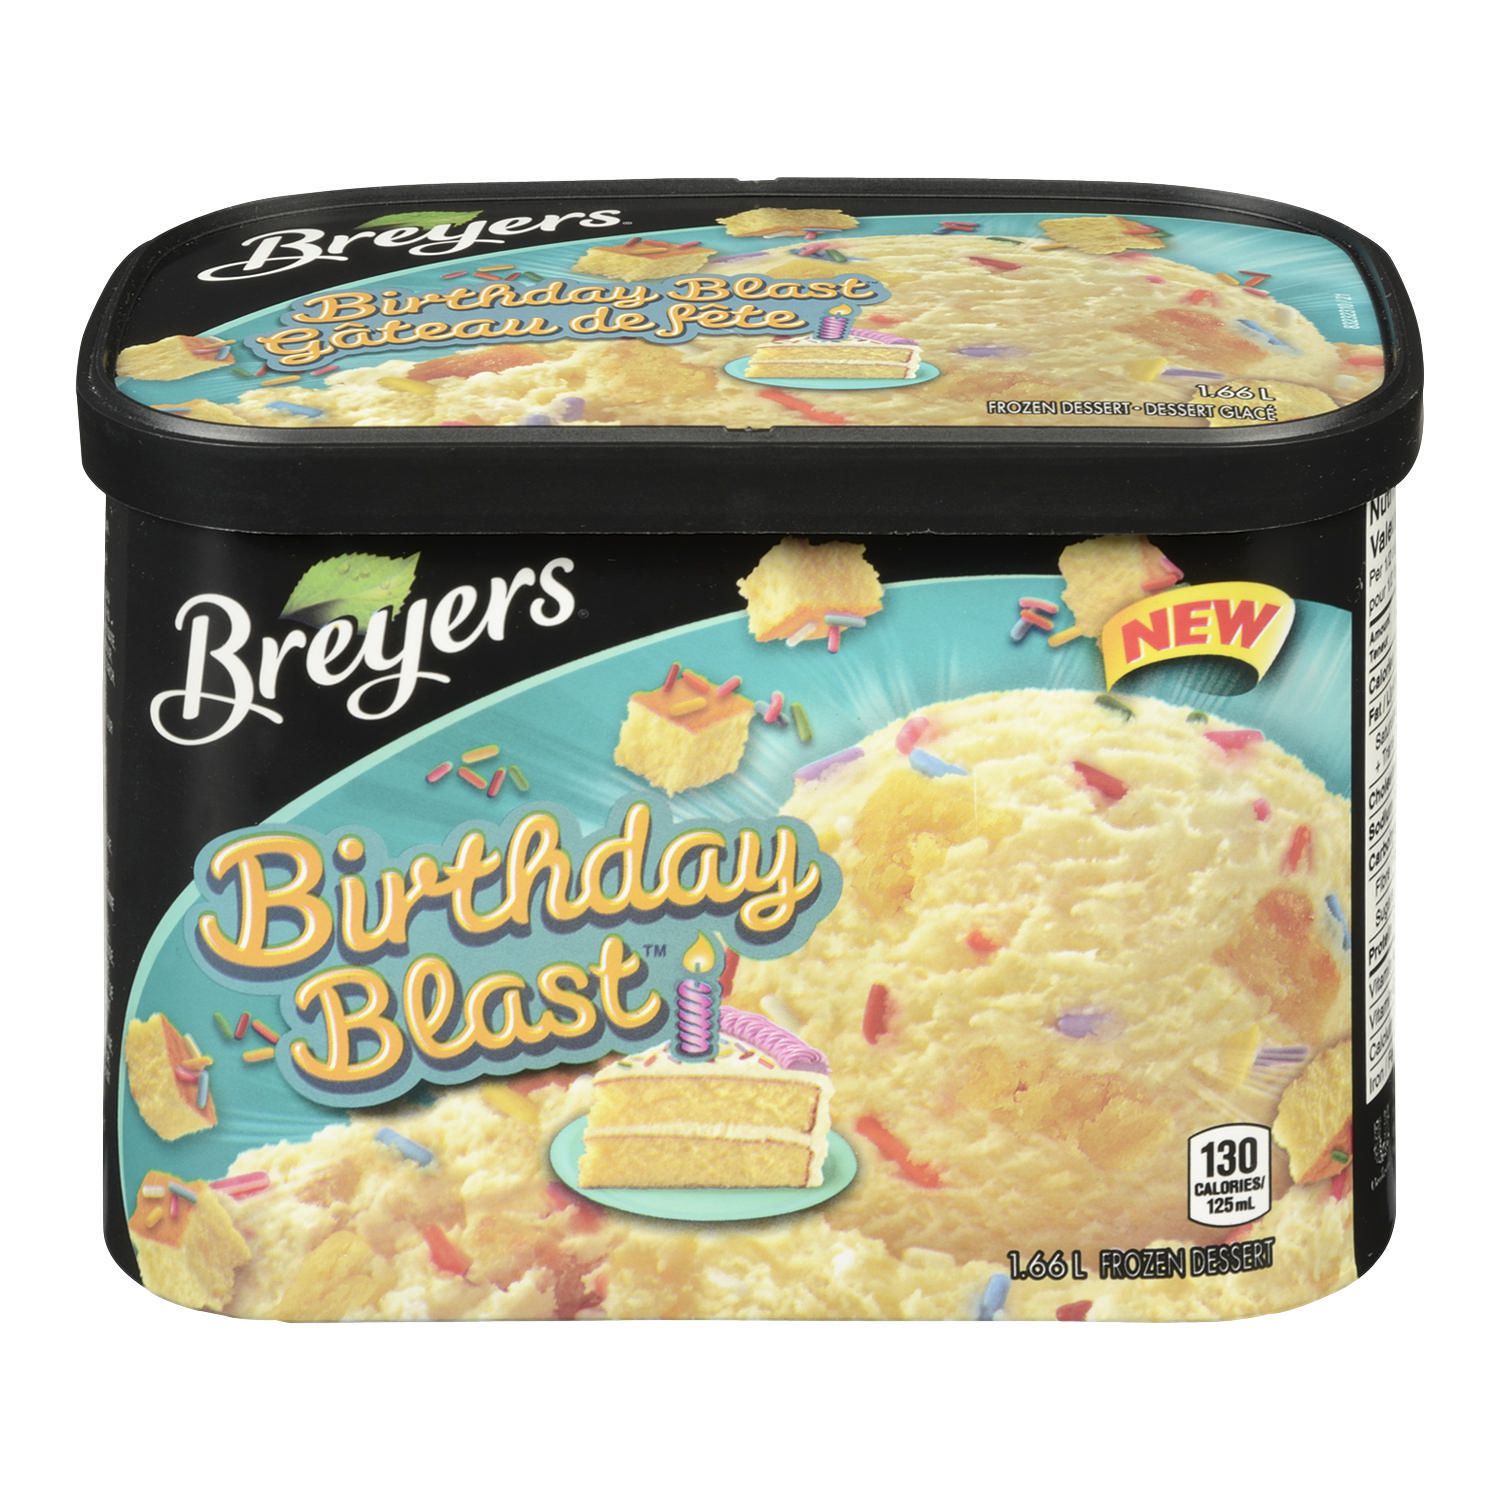 Serve Up Something Tasty & Grab Delicious Breyers® During The BOGO Sale At  Publix - iHeartPublix